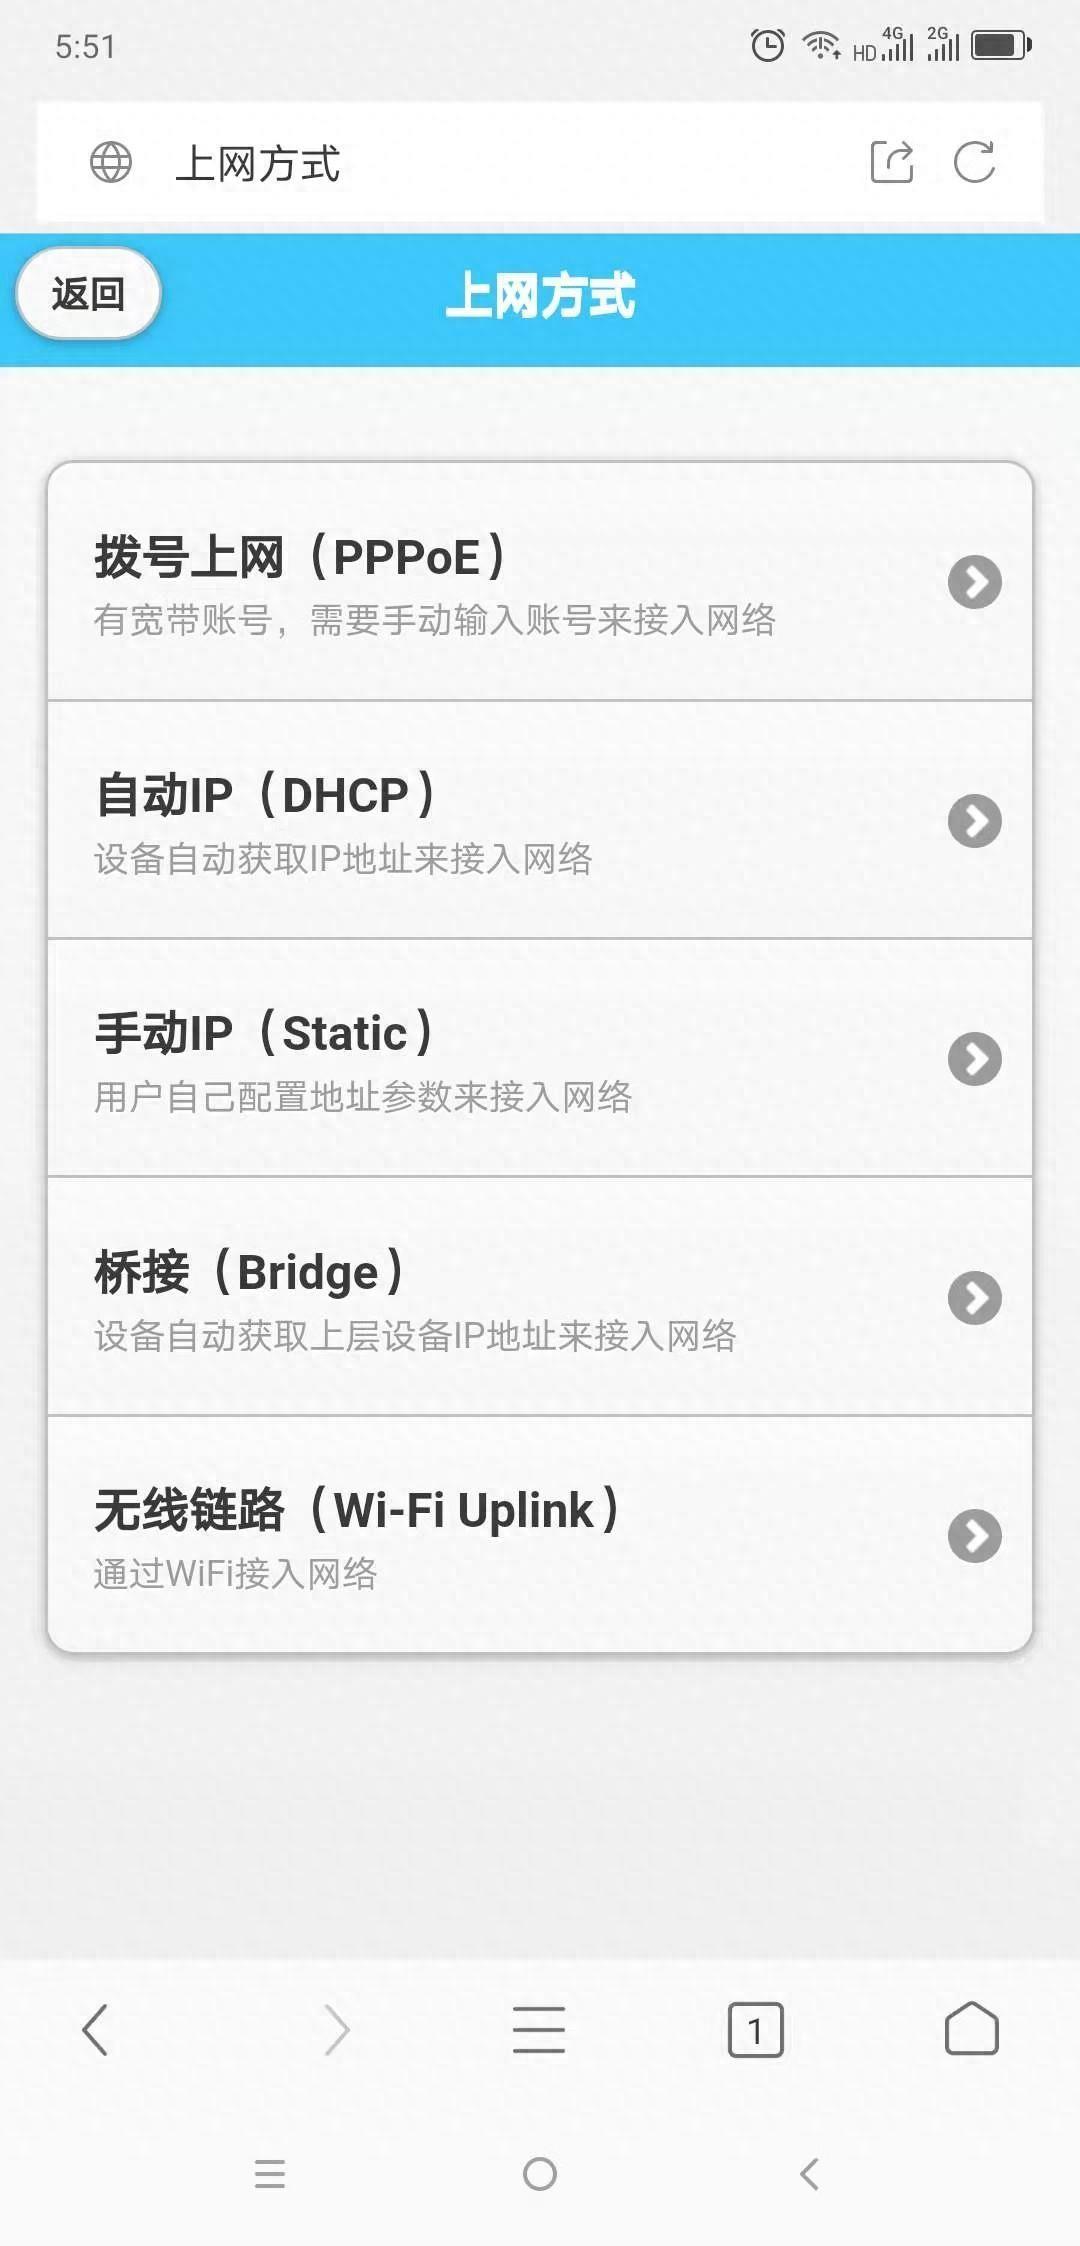 wifi.cmcc手机登录入口(路由器管理登录页面)